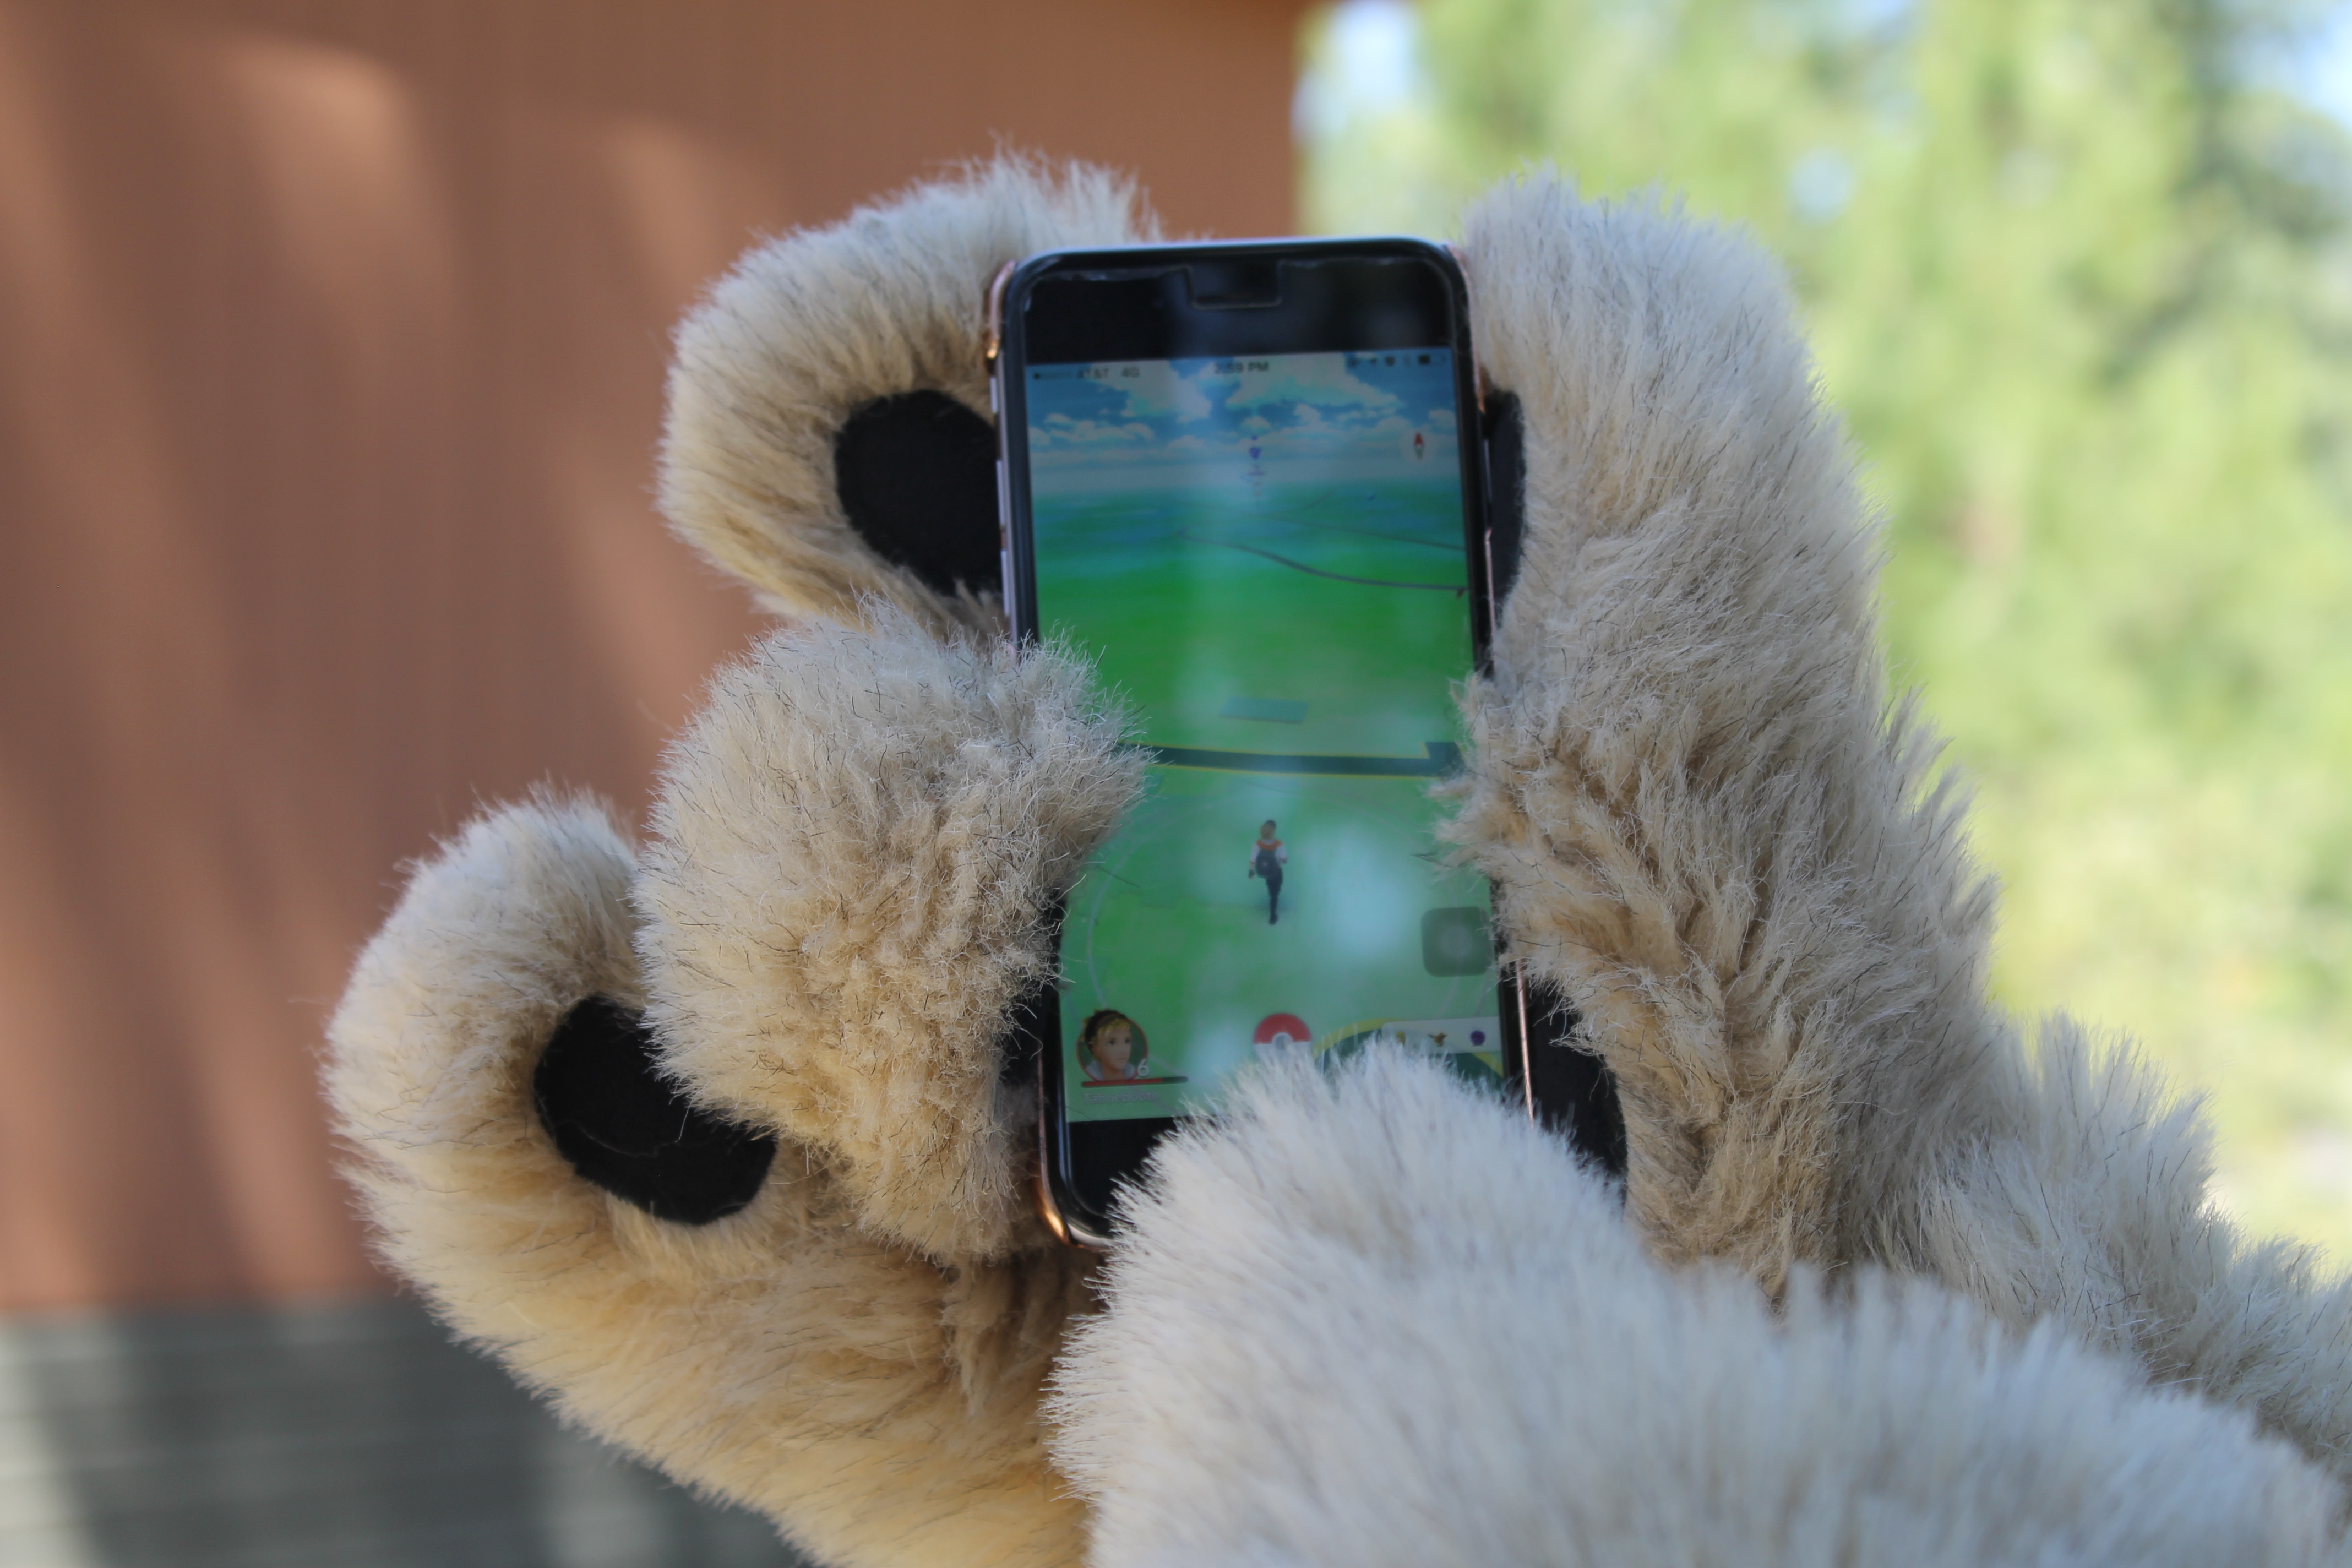 LTCC Coyote holding a smartphone